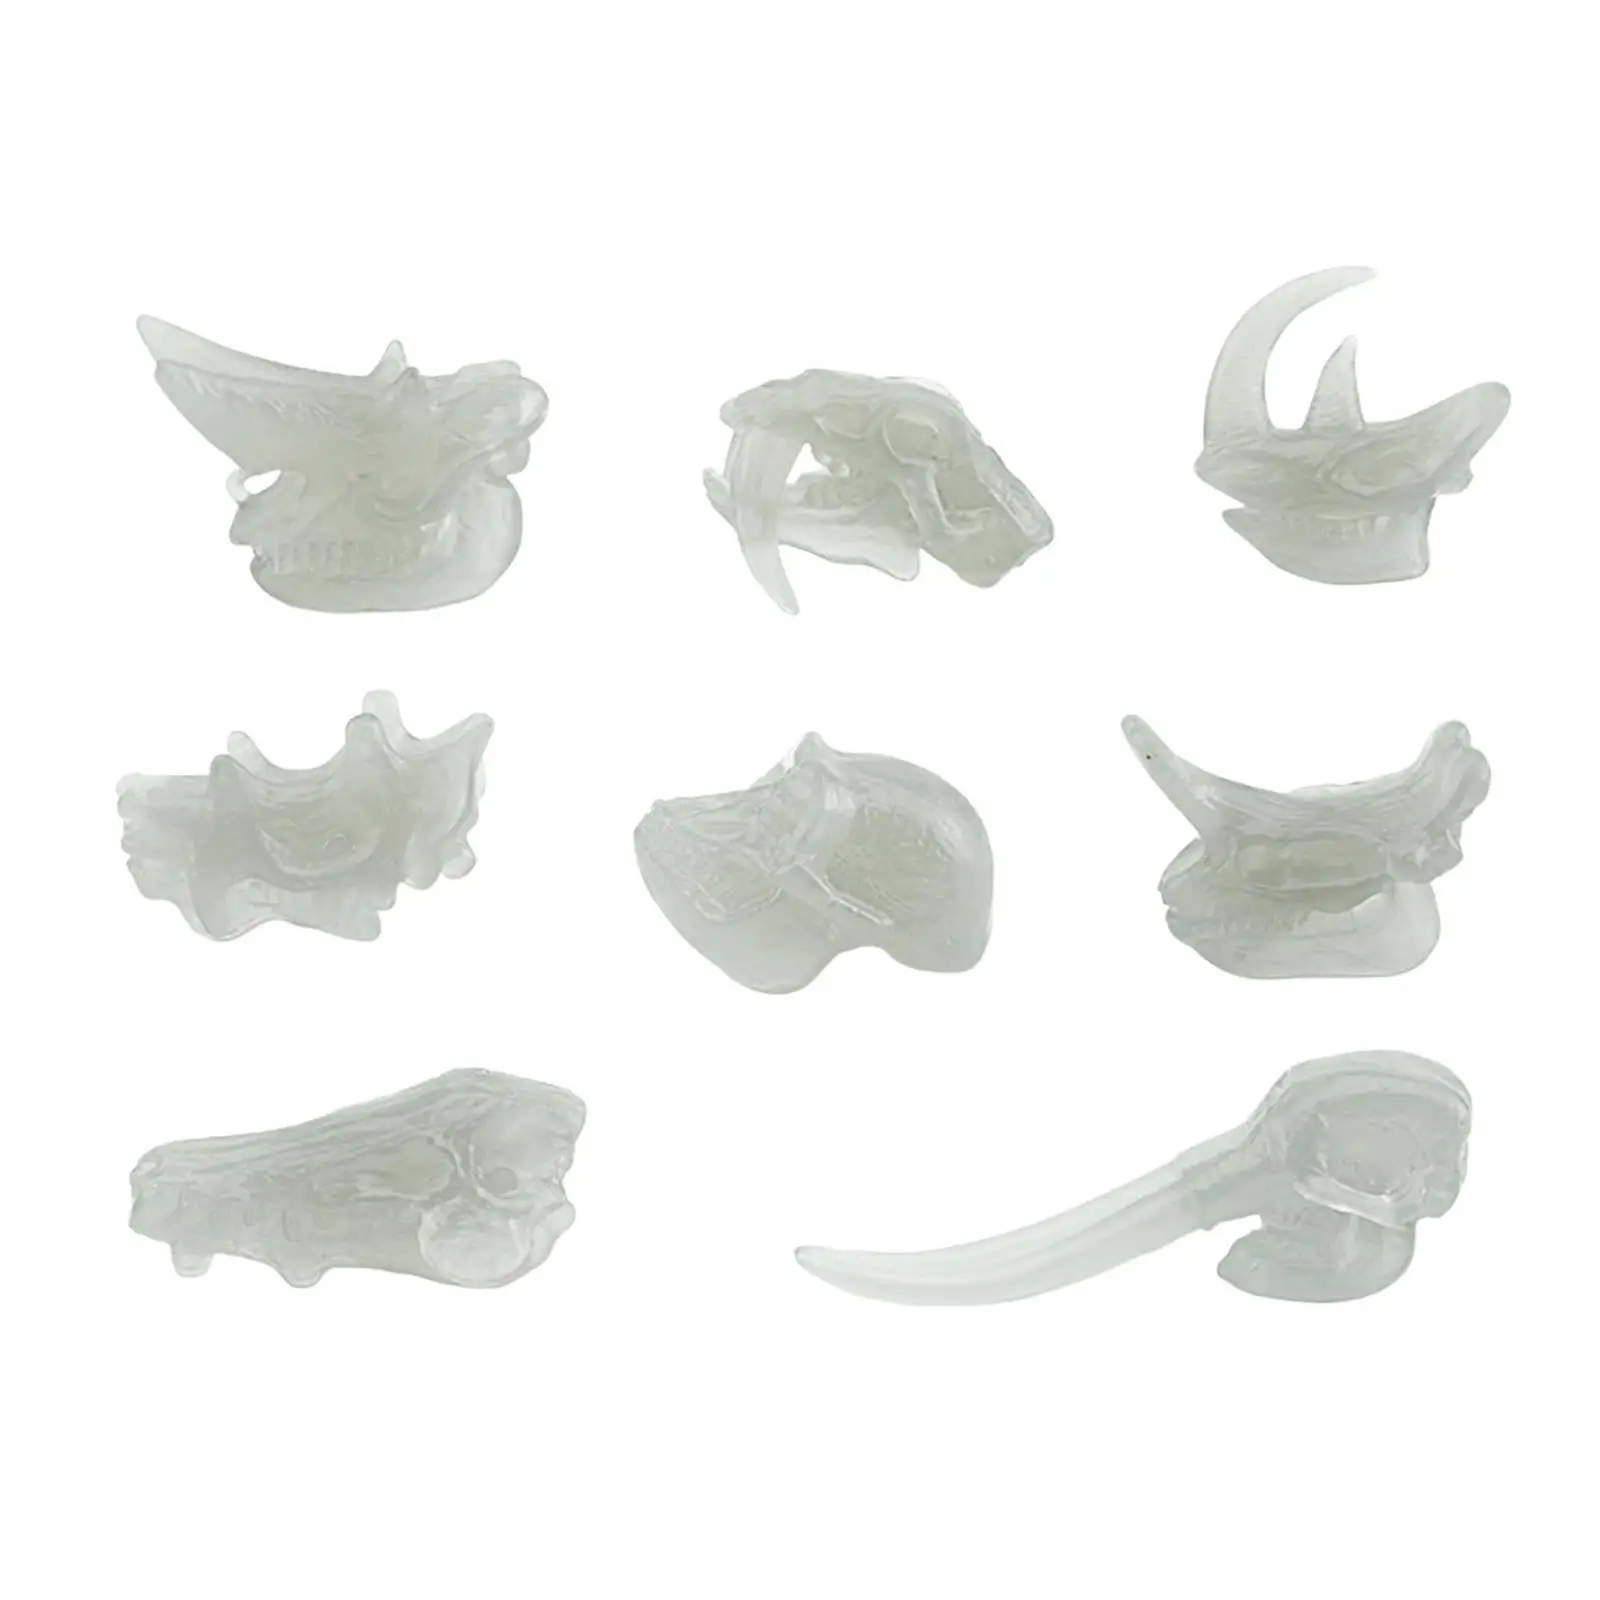 Children Archeology Dino Toy Set Educational Dinosaurs Skull Model Toys for Kids Toys Rewards Preschool Science